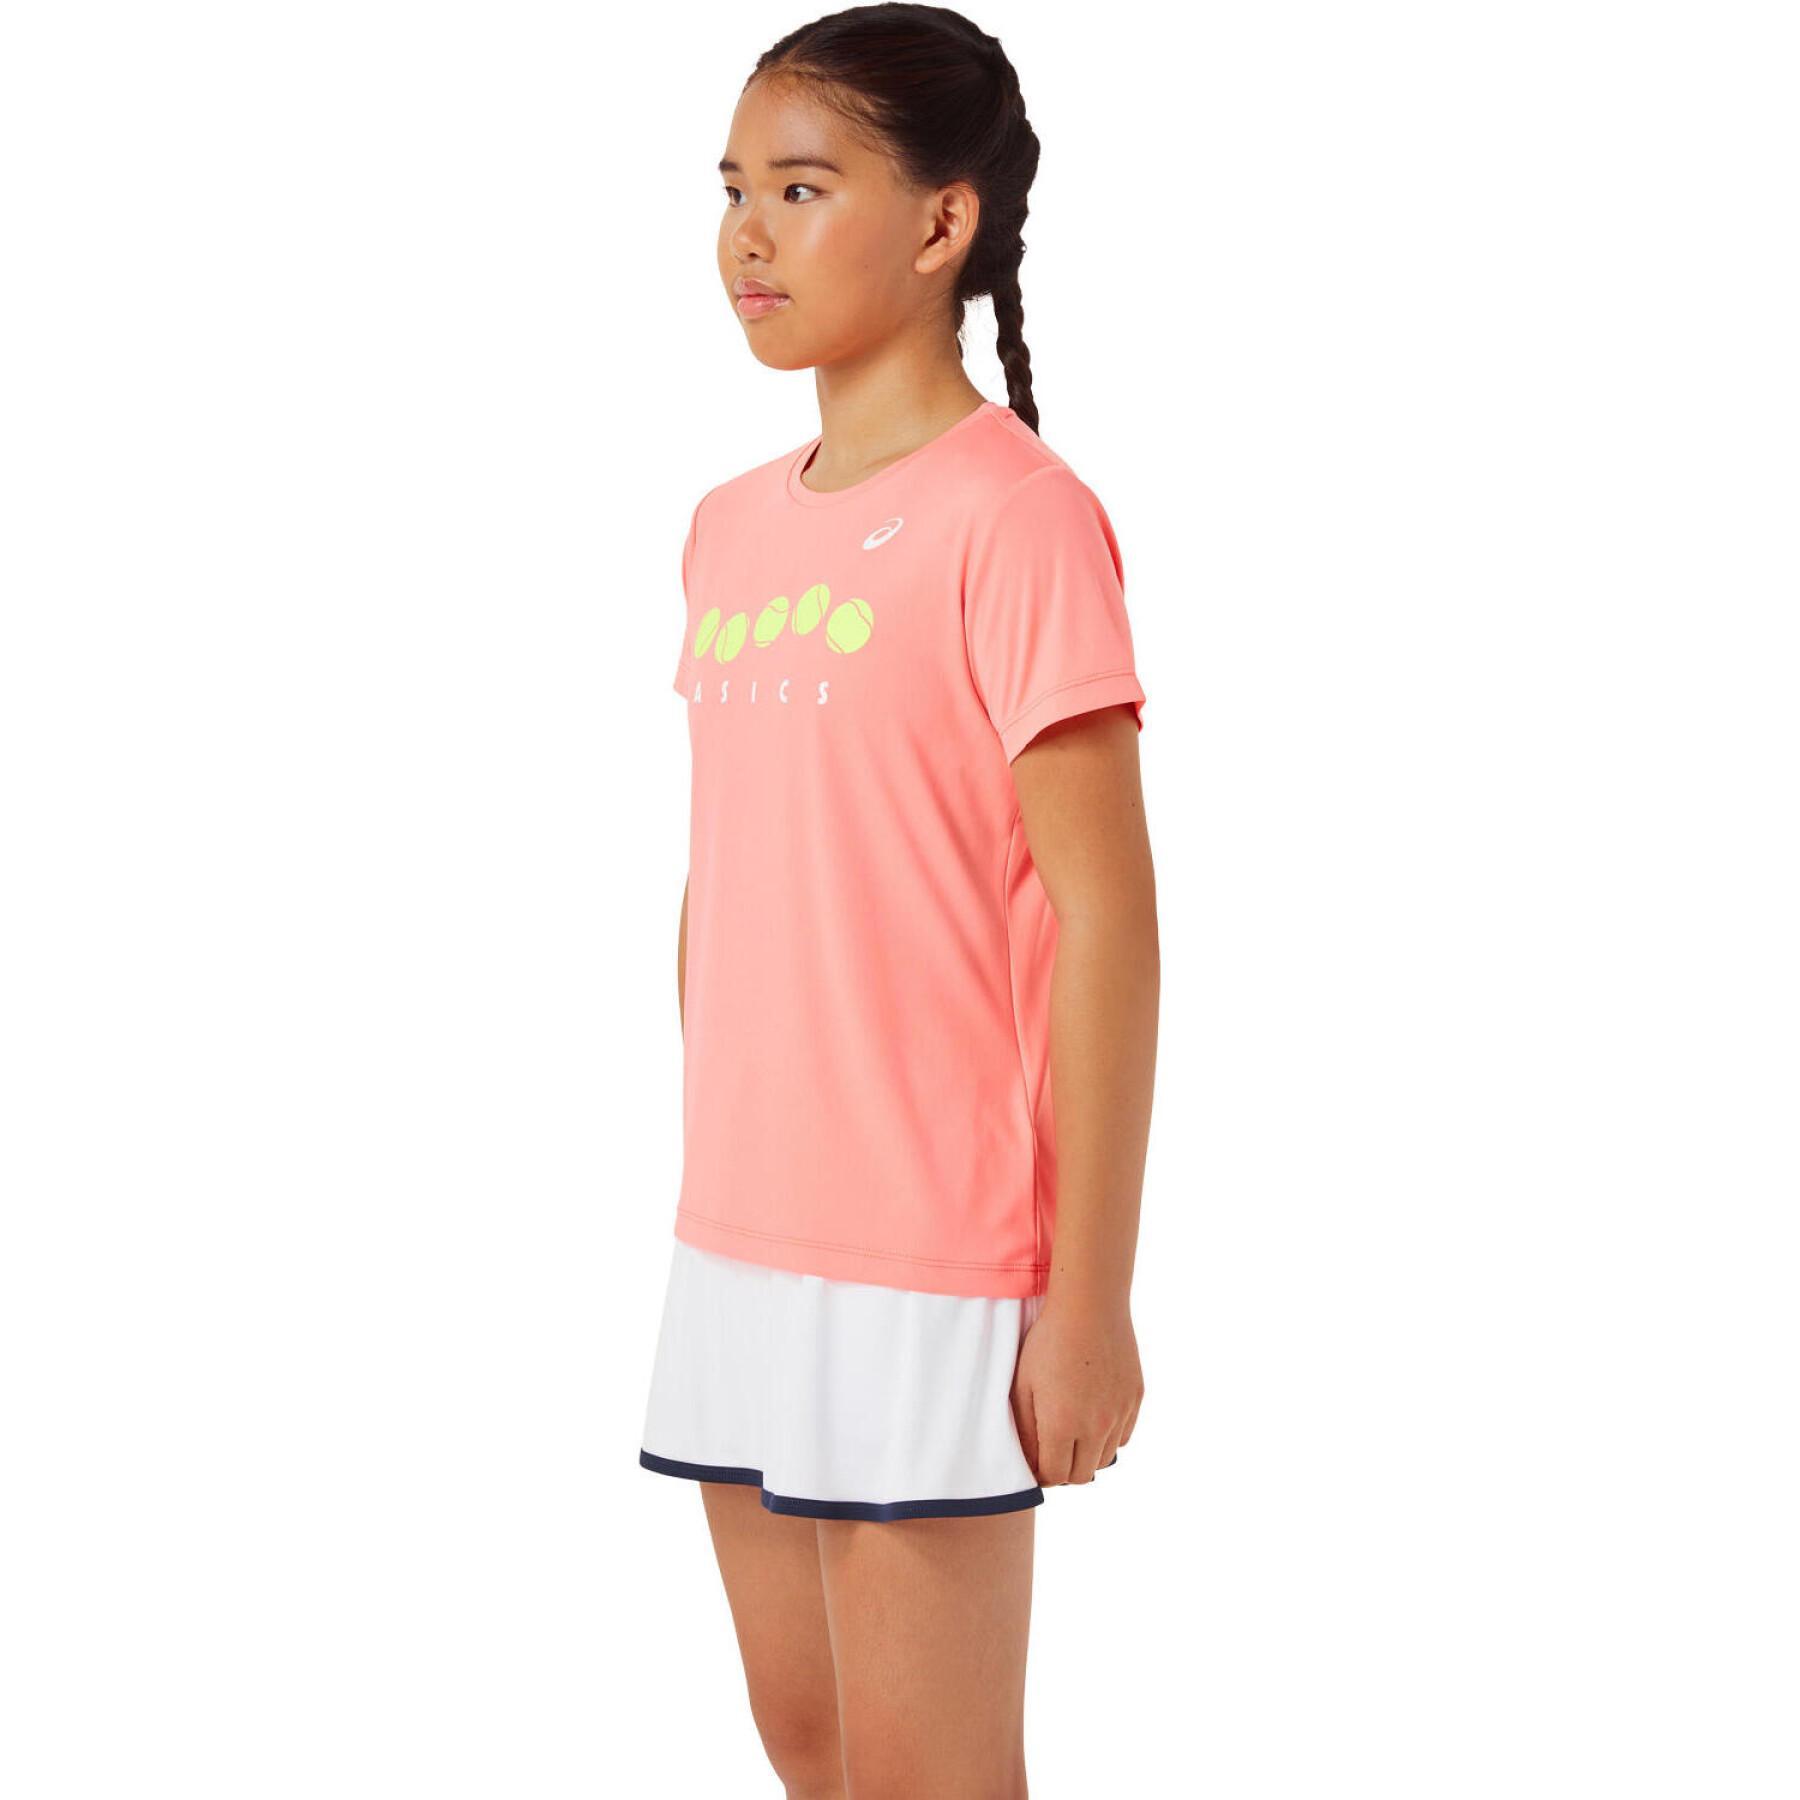 Mädchen-Tennis-T-Shirt Asics Graphic